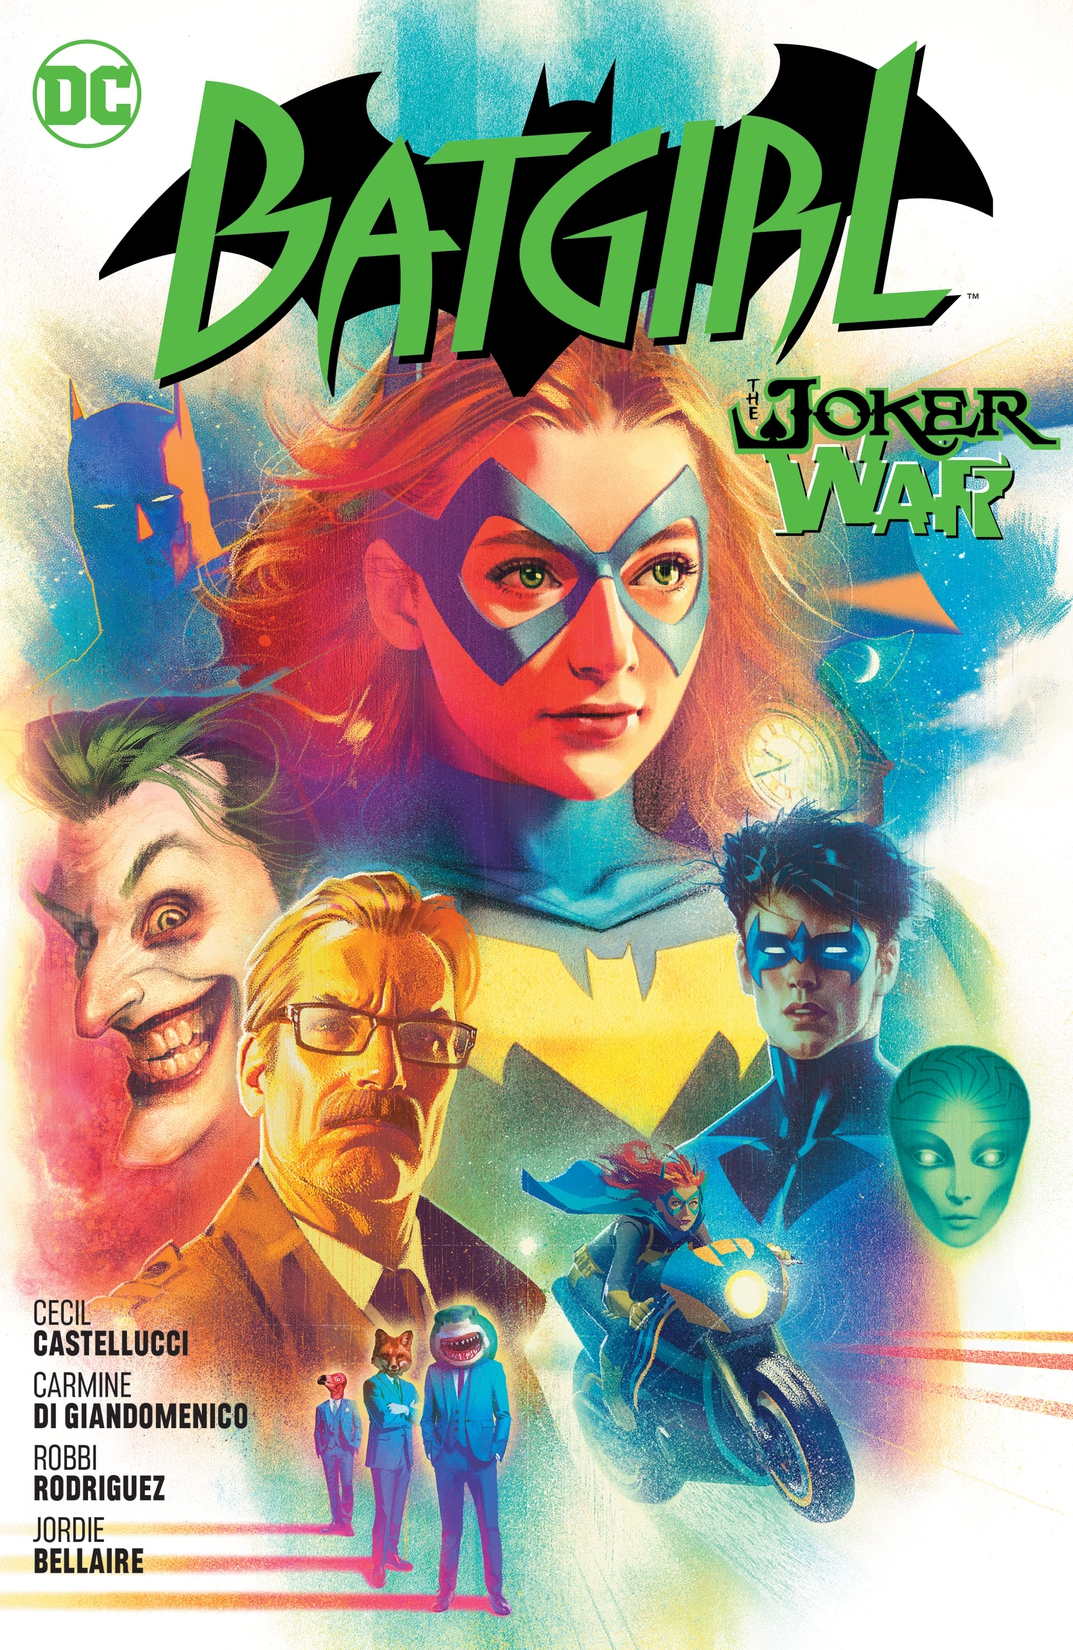 Batgirl Vol. 8: The Joker War preview images